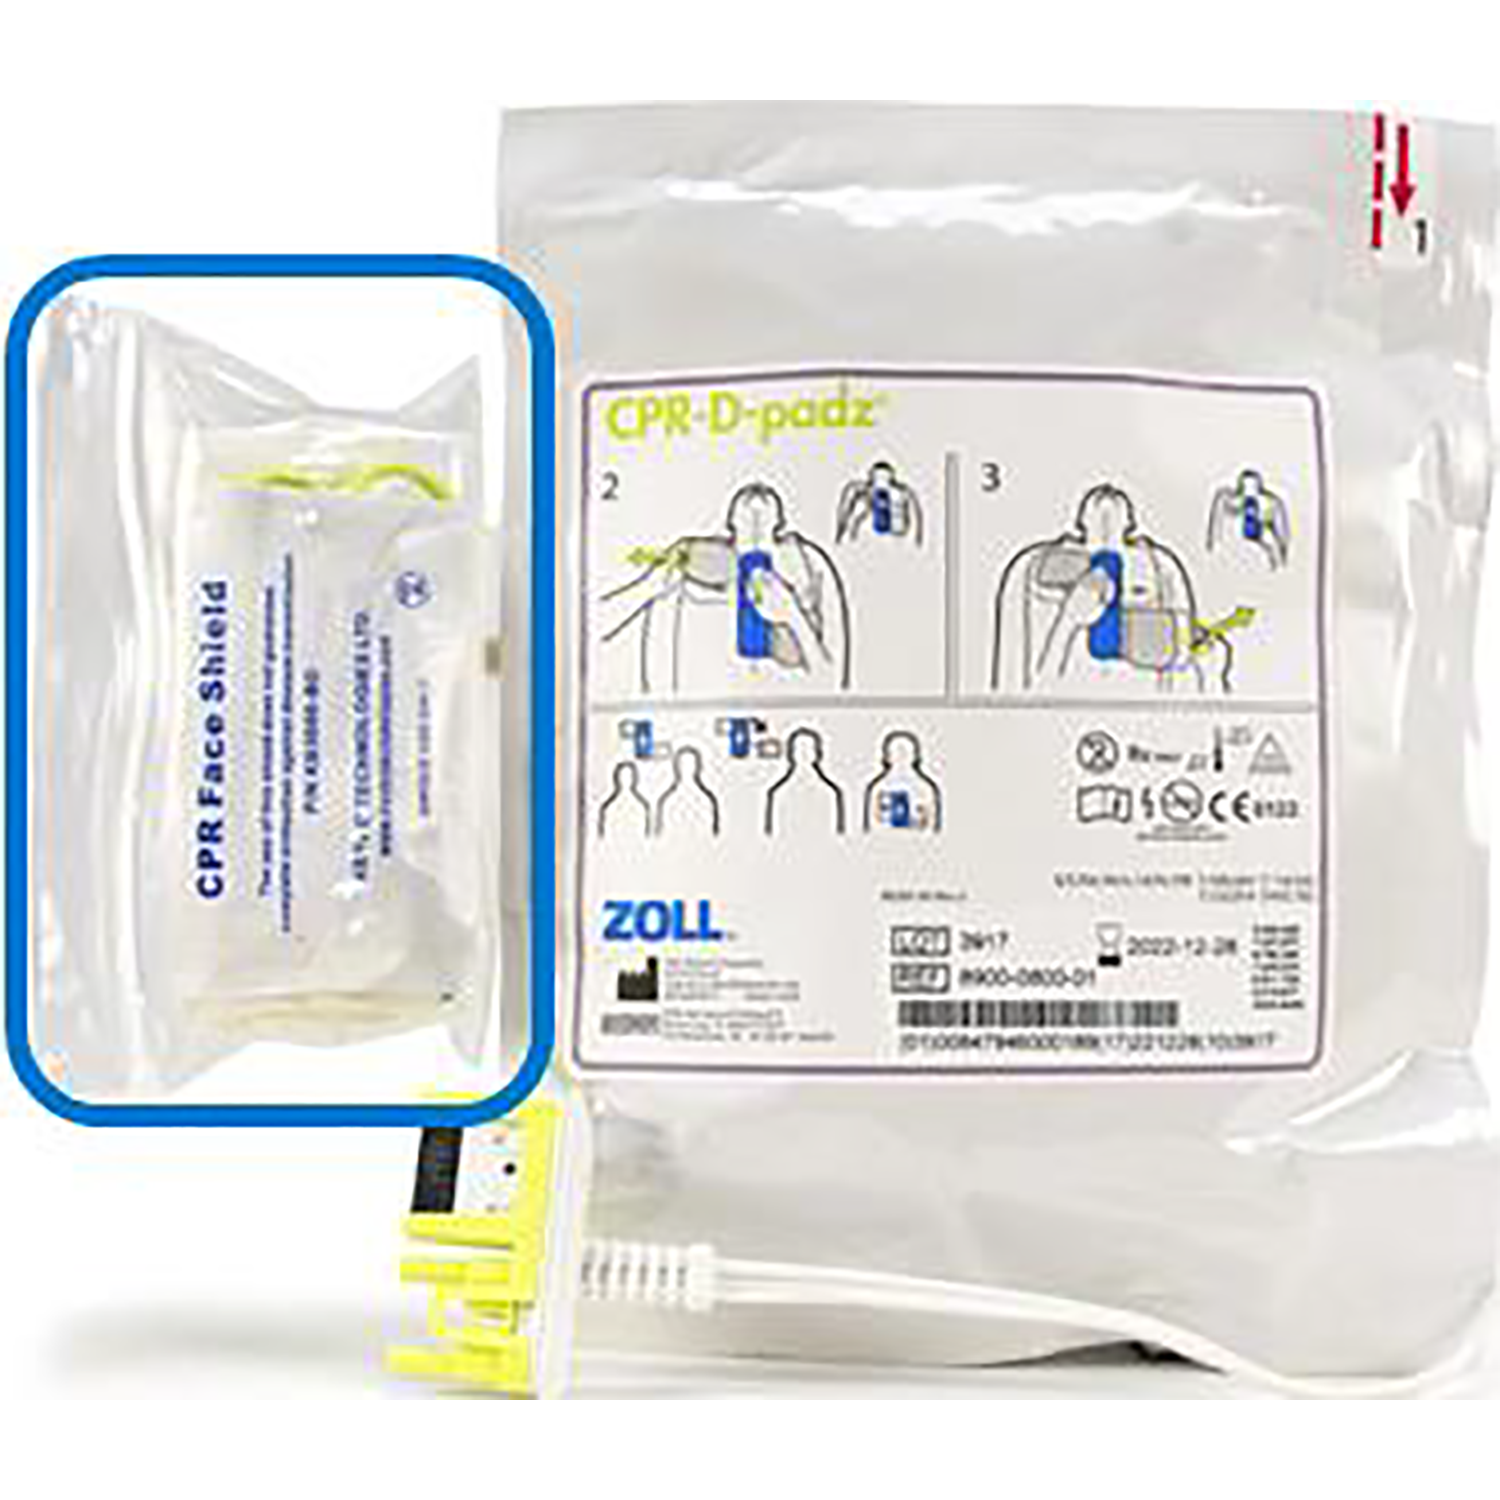 CPR D-padz Electrode Rescue Accessory Kit |  Single (1)